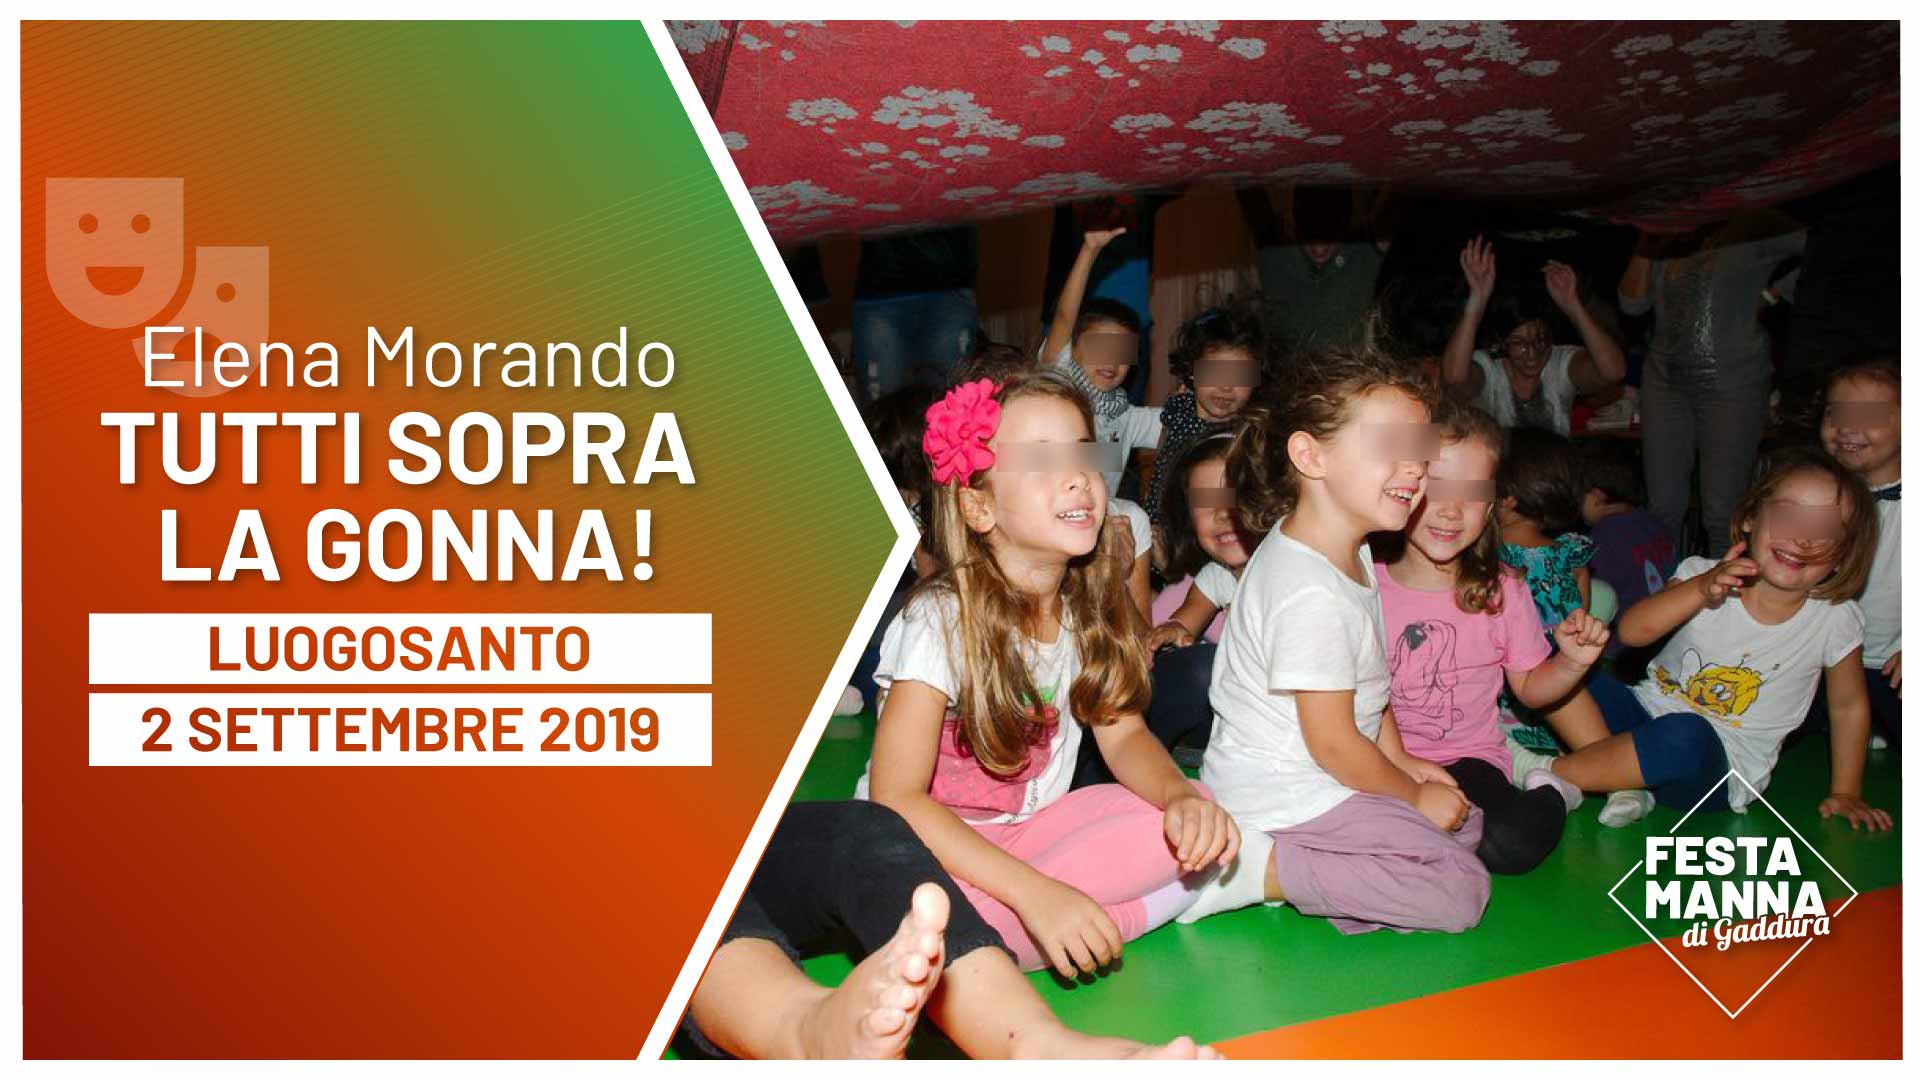 “Tutti sopra la gonna!”, lecturas para niños de Elena Morando | Festa Manna di Gaddura 2019